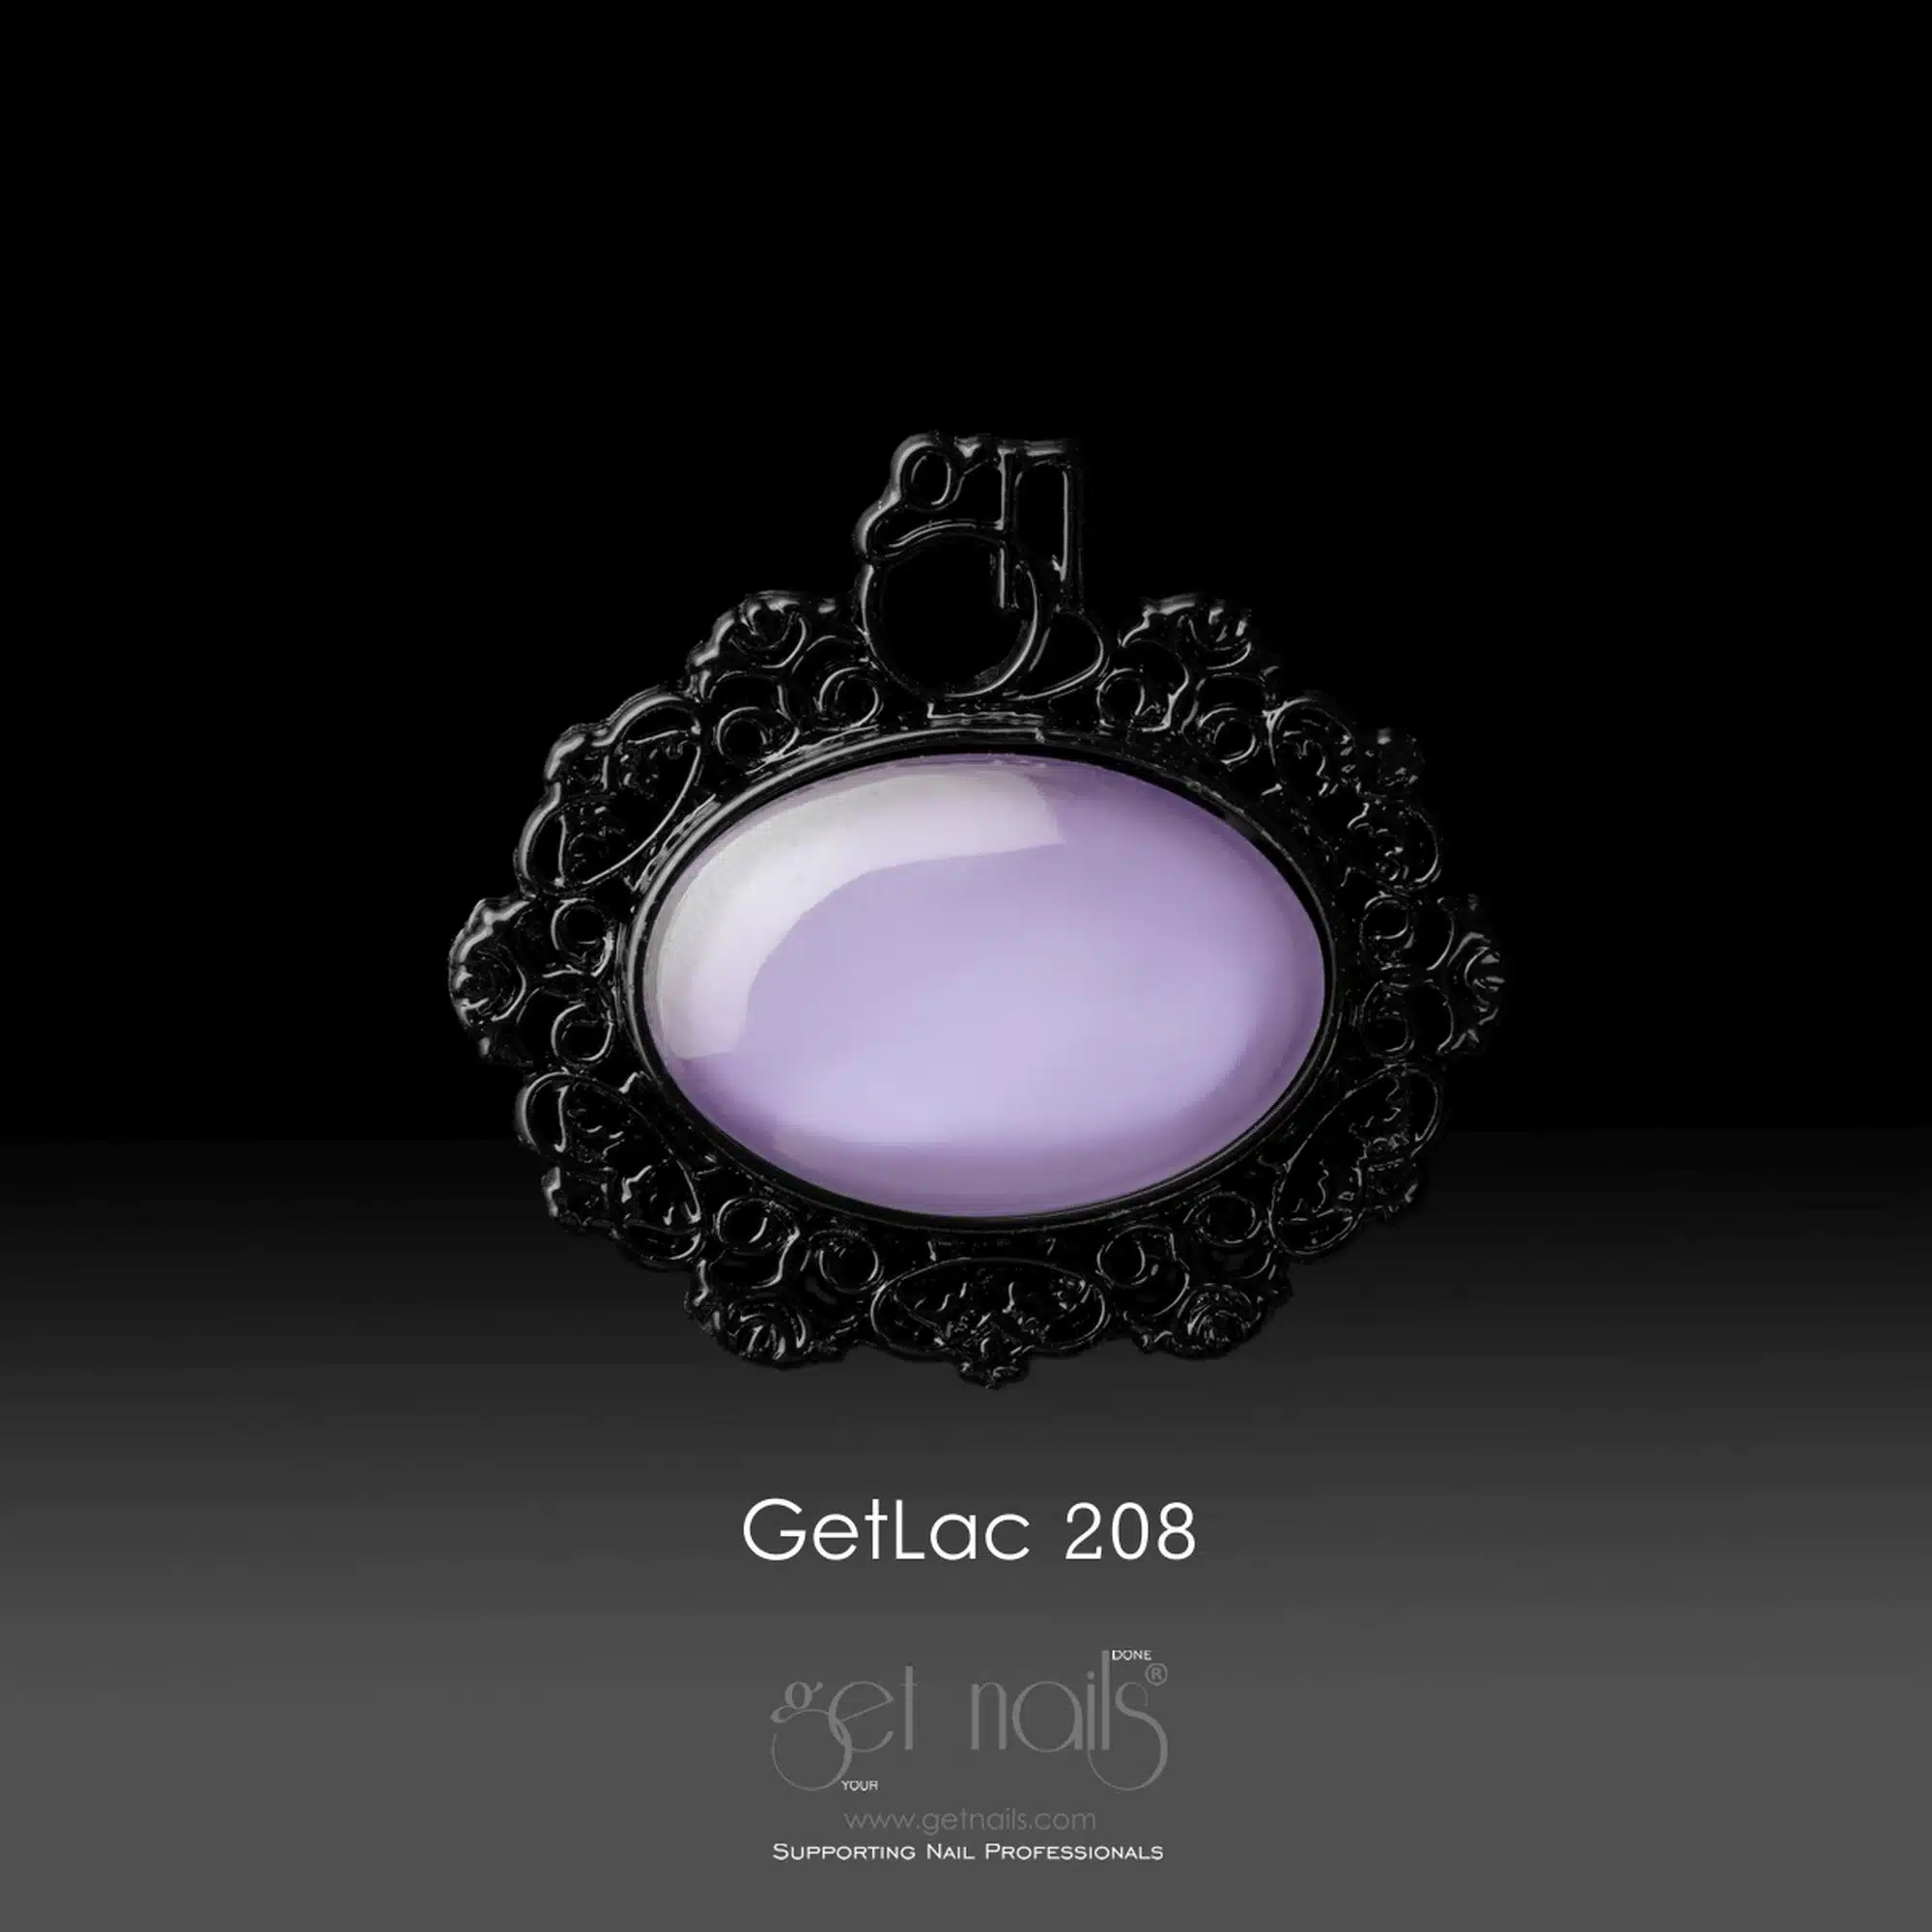 Get Nails Austria - GetLac 208 Levendula Macaroon 15g